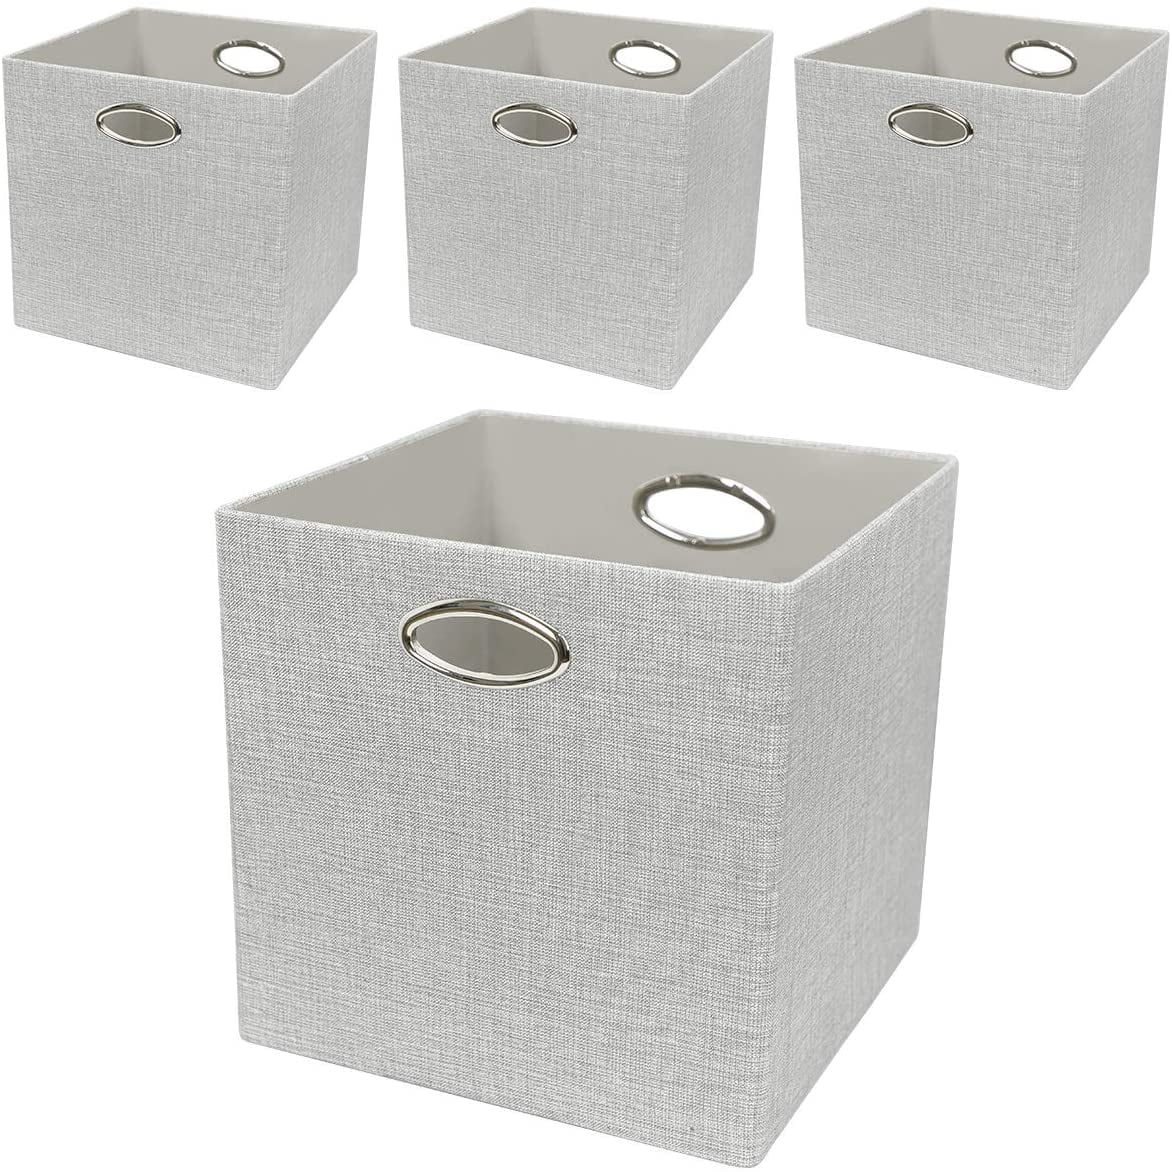 Posprica Storage Boxes grey lantern Set of 4 Foldable Storage Cubes Baskets,28×28×28cm 